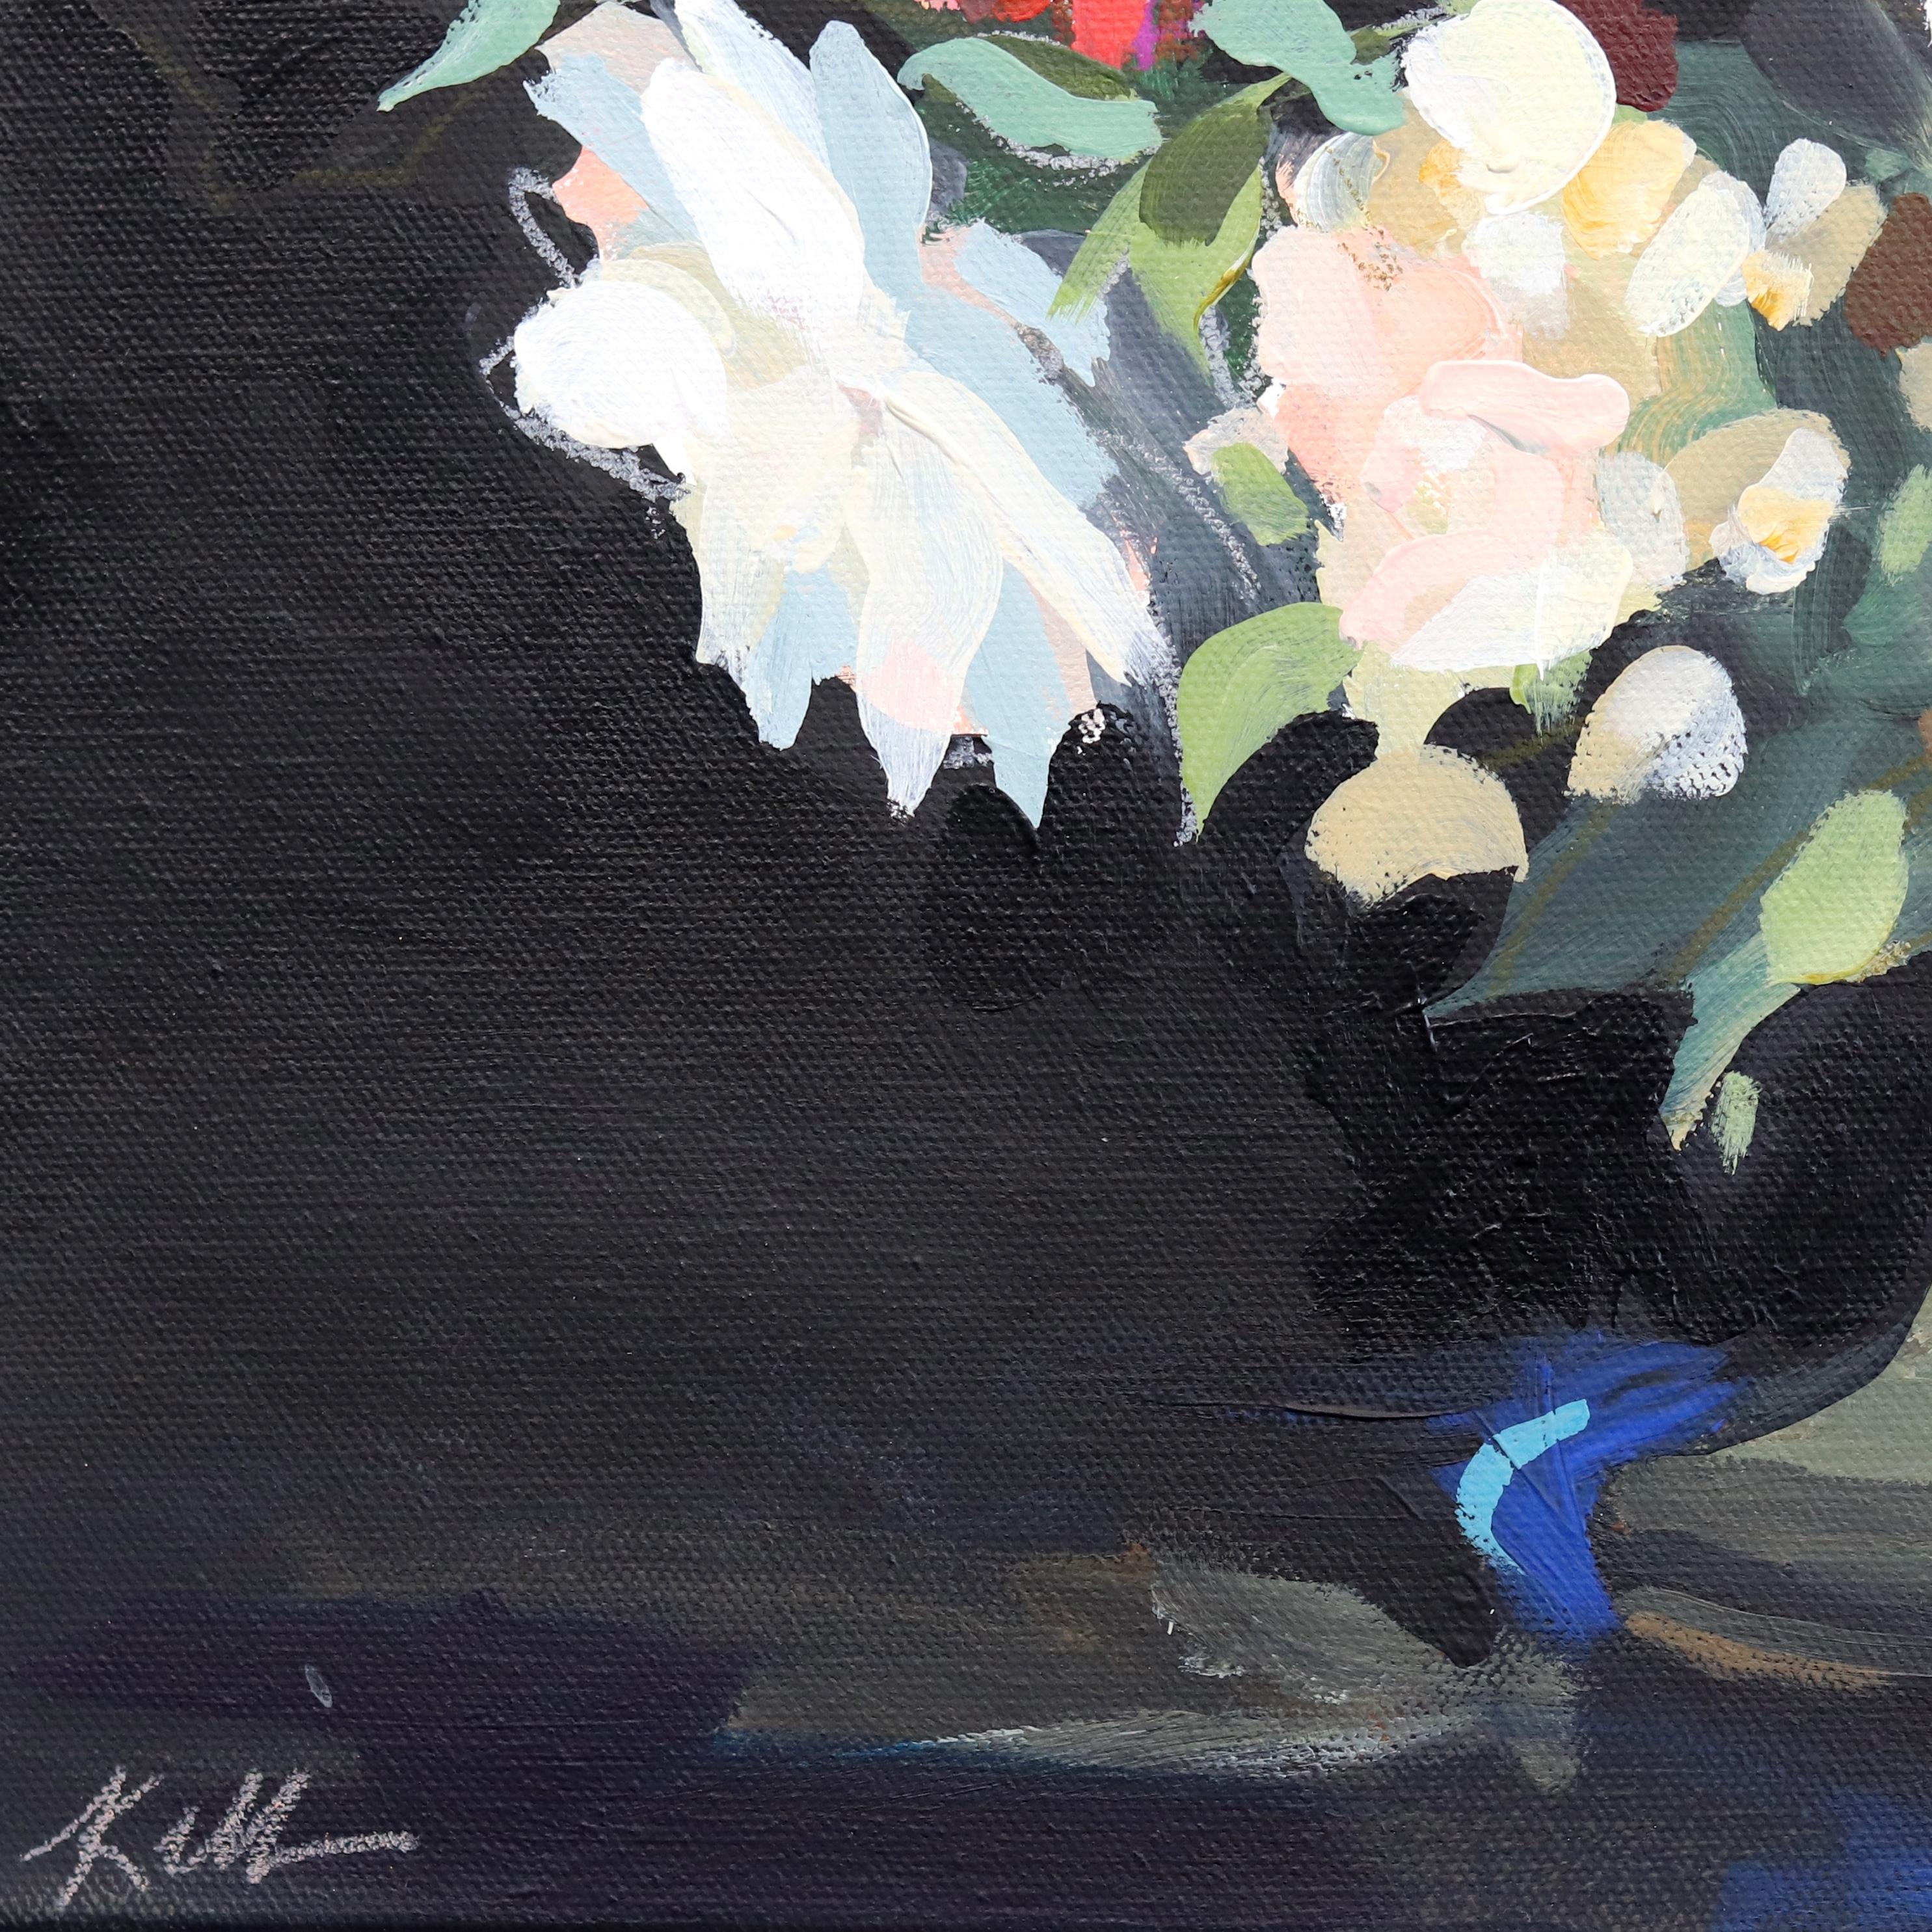 Umbrella Petals - Floral Still Life Contemporary Impressionist Painting For Sale 5